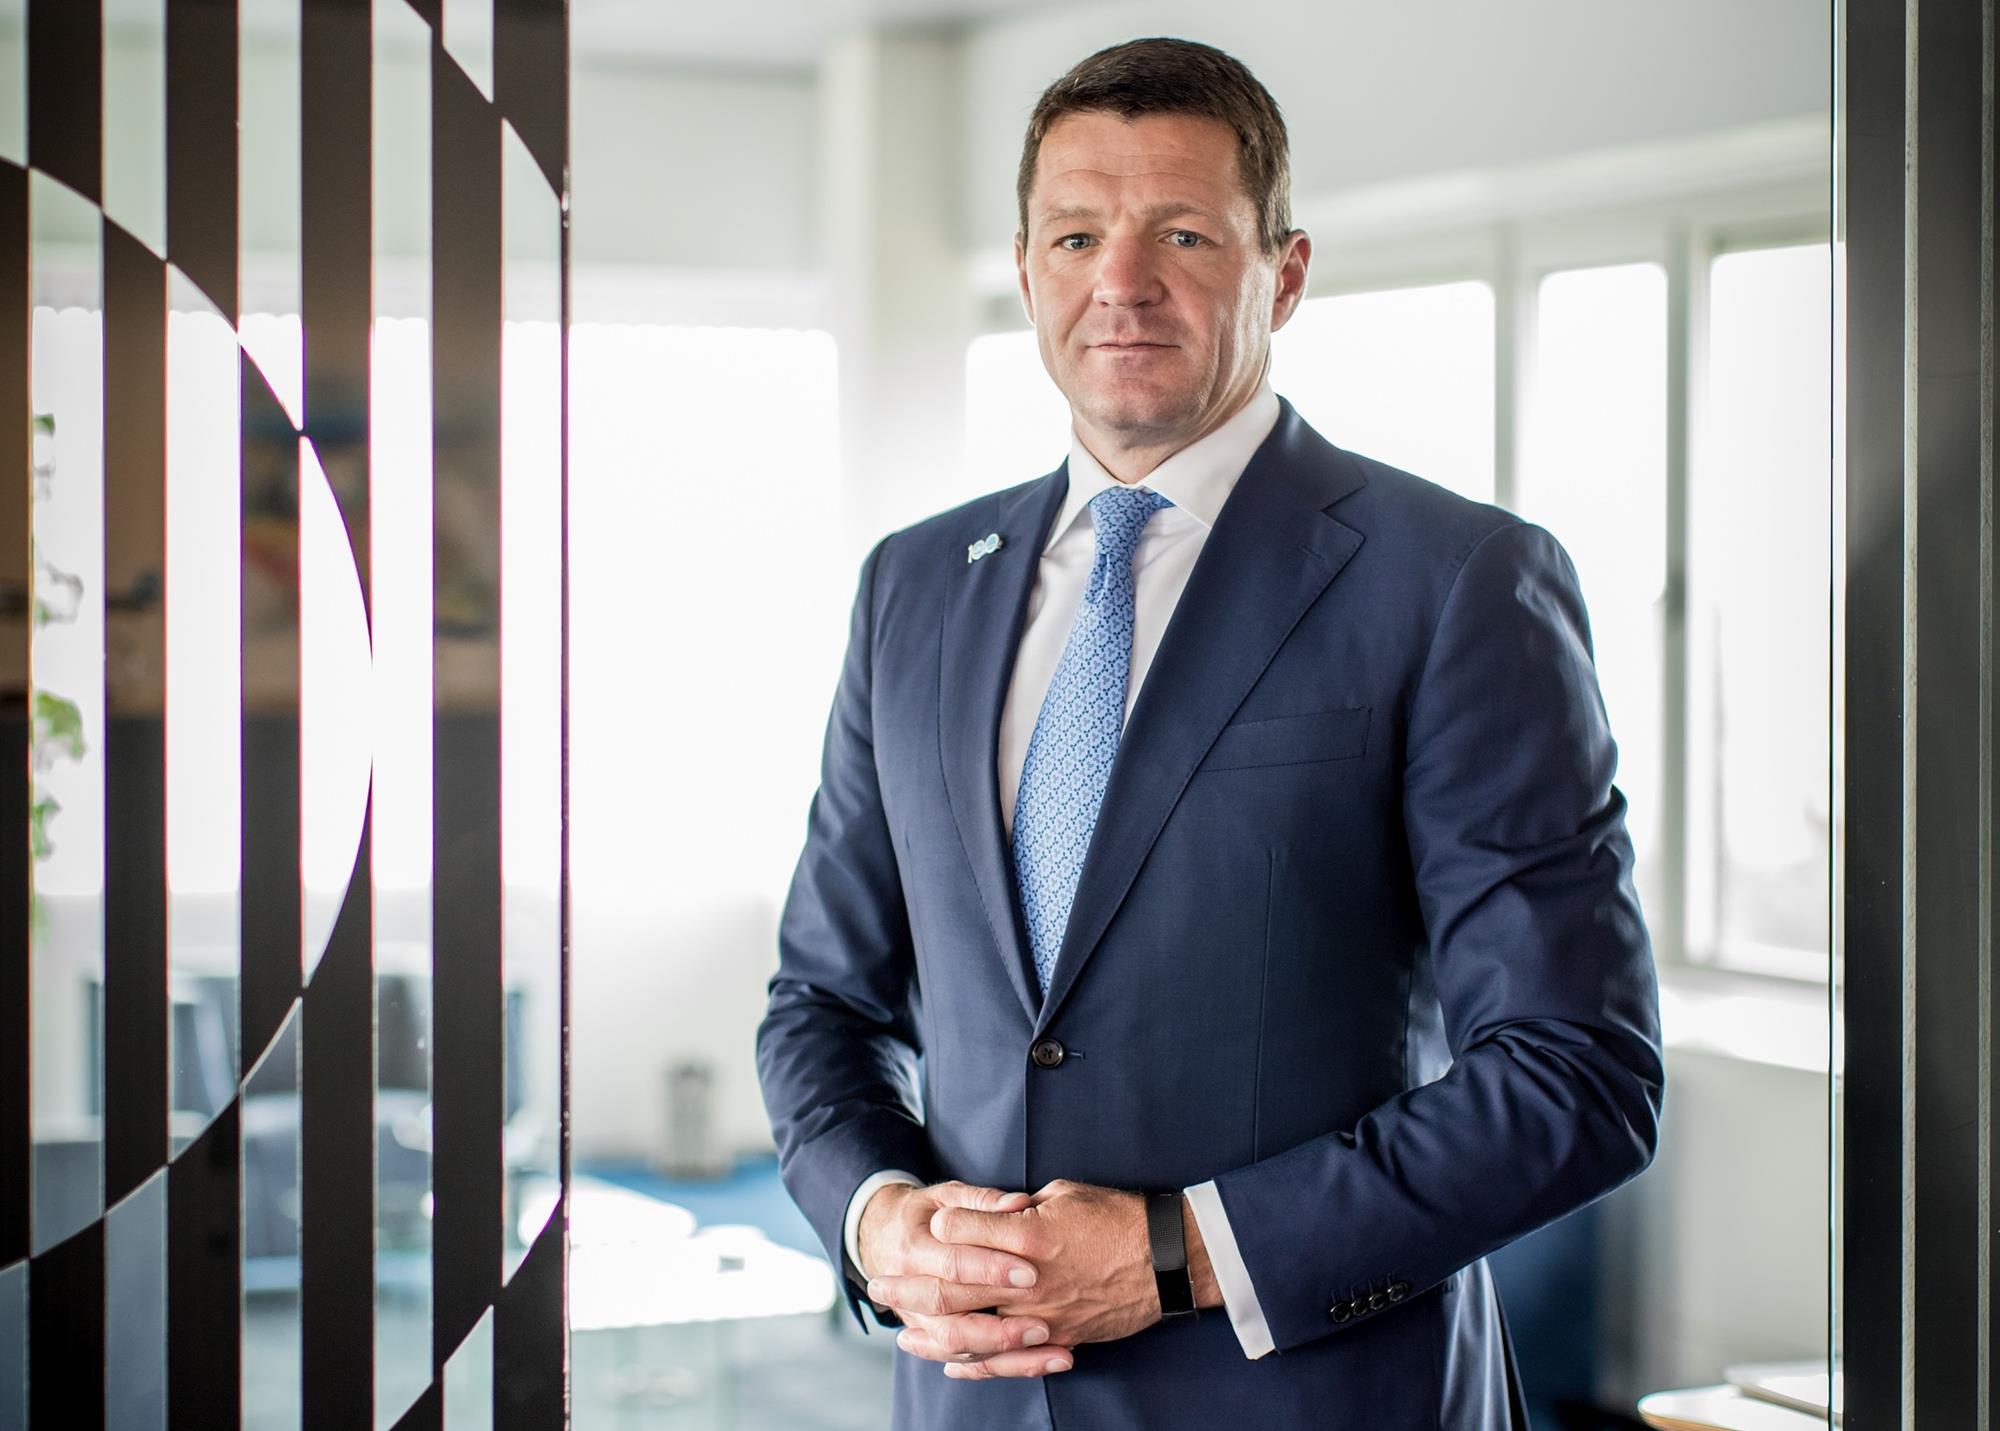 Pieter Elbers Joins IndiGo as CEO